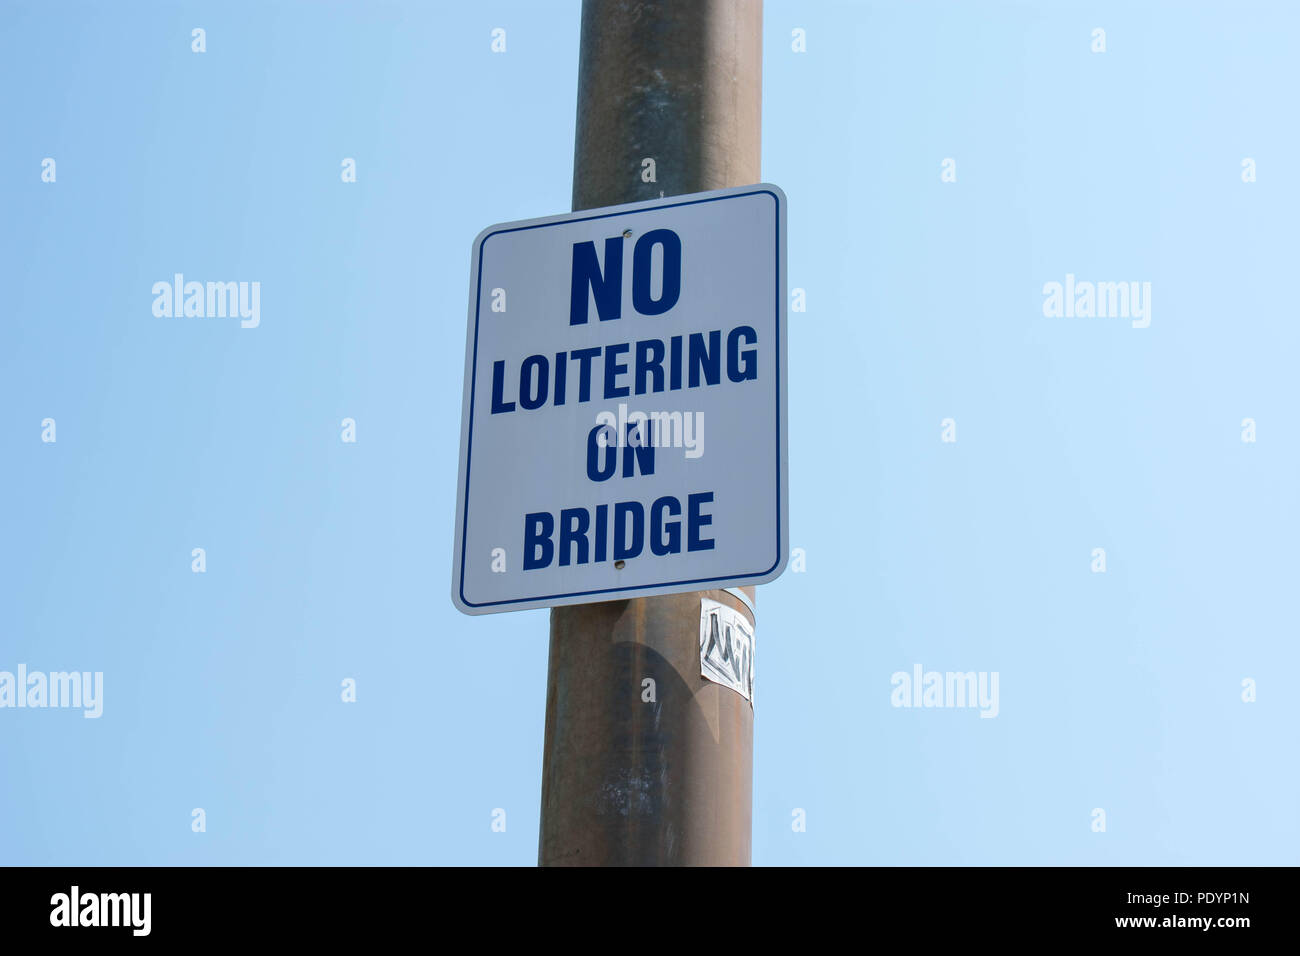 No loiterig on bridge sign with a plain light blue backround. Stock Photo